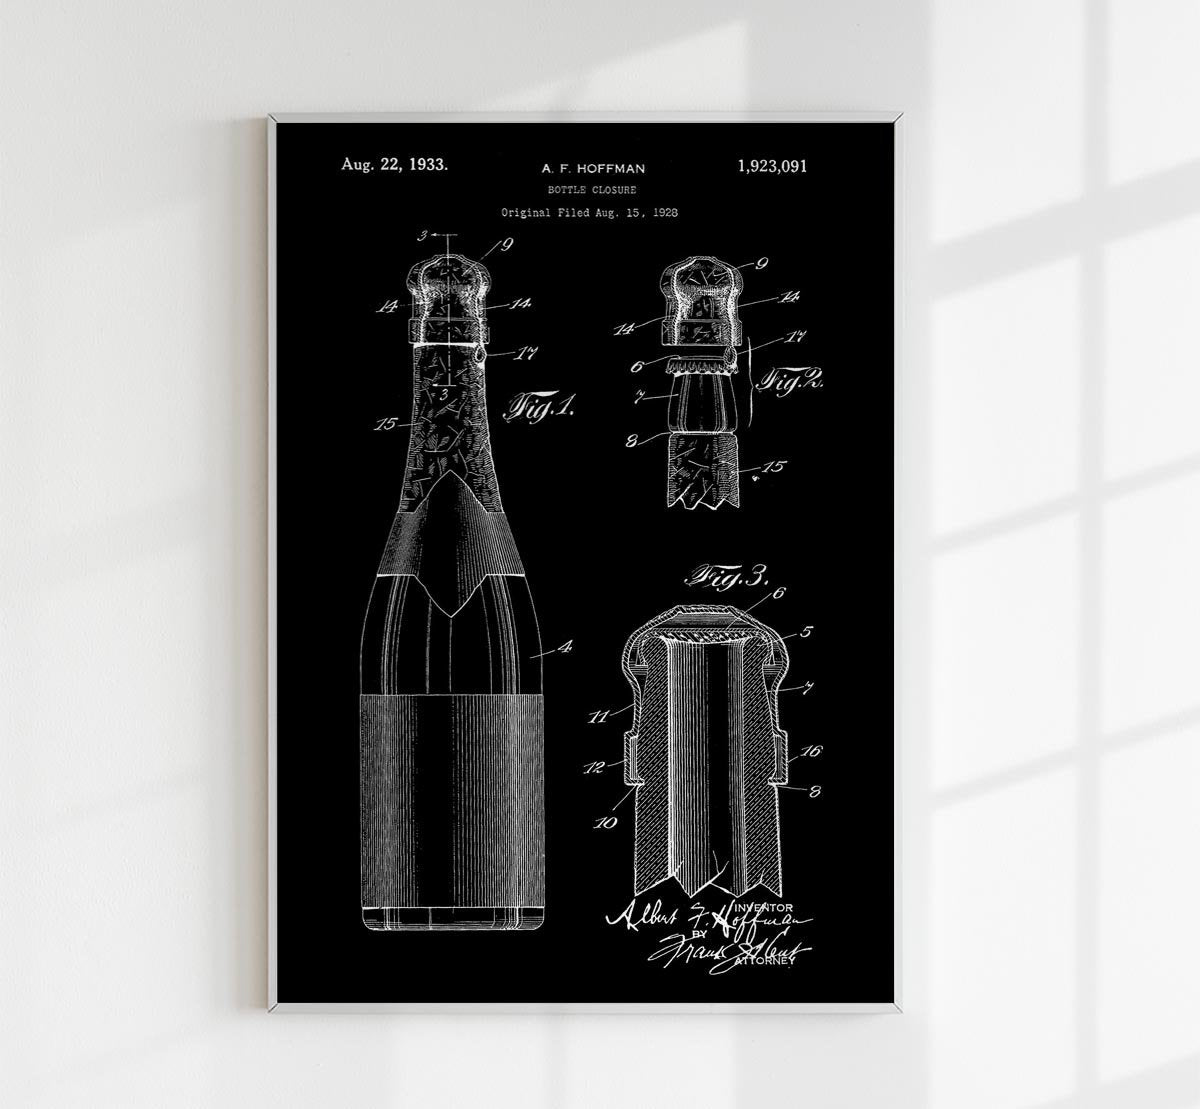 Bottle Closure Patent Poster